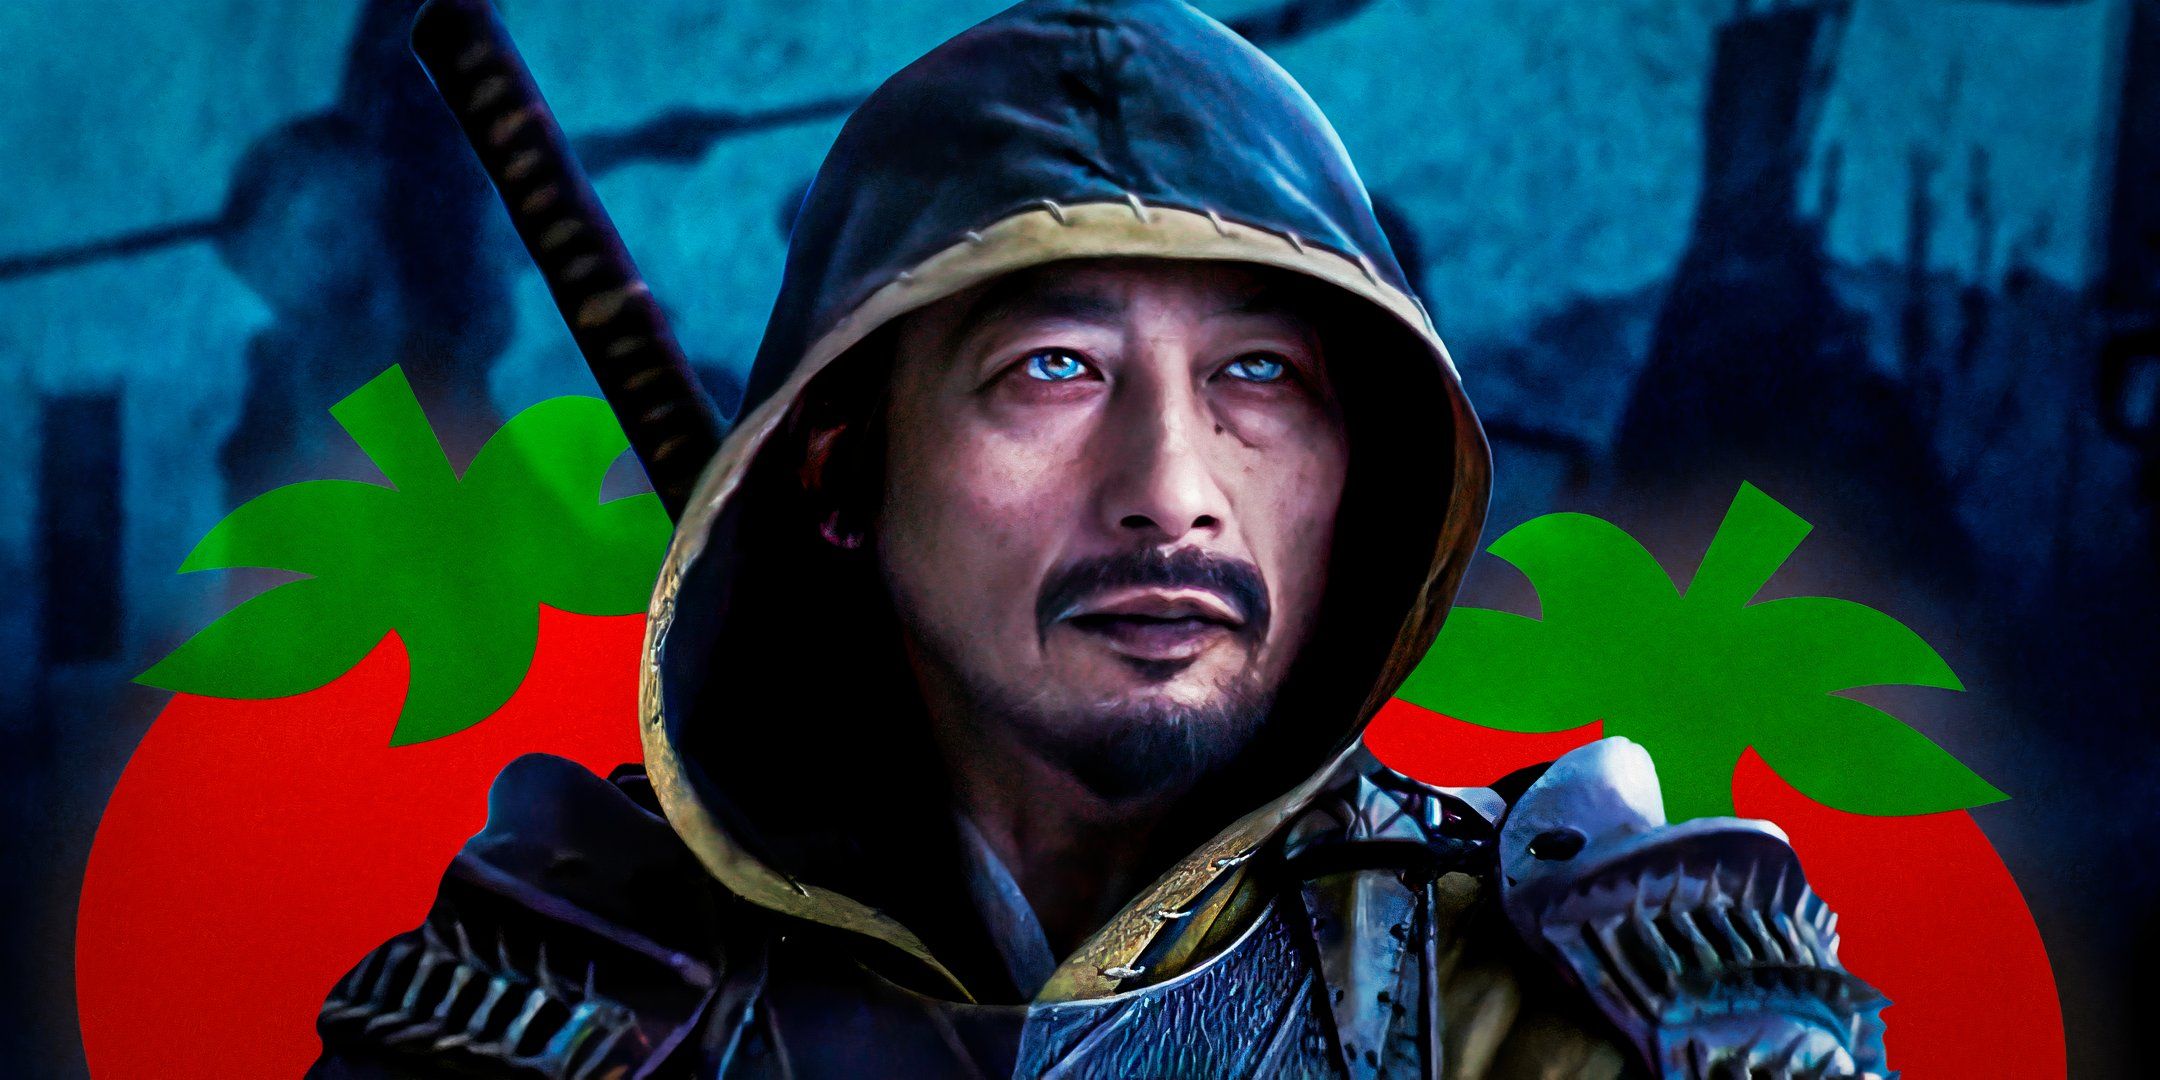 Hiroyuki Sanada as Scorpion in Mortal Kombat (2021) atop logos for Rotten Tomatoes